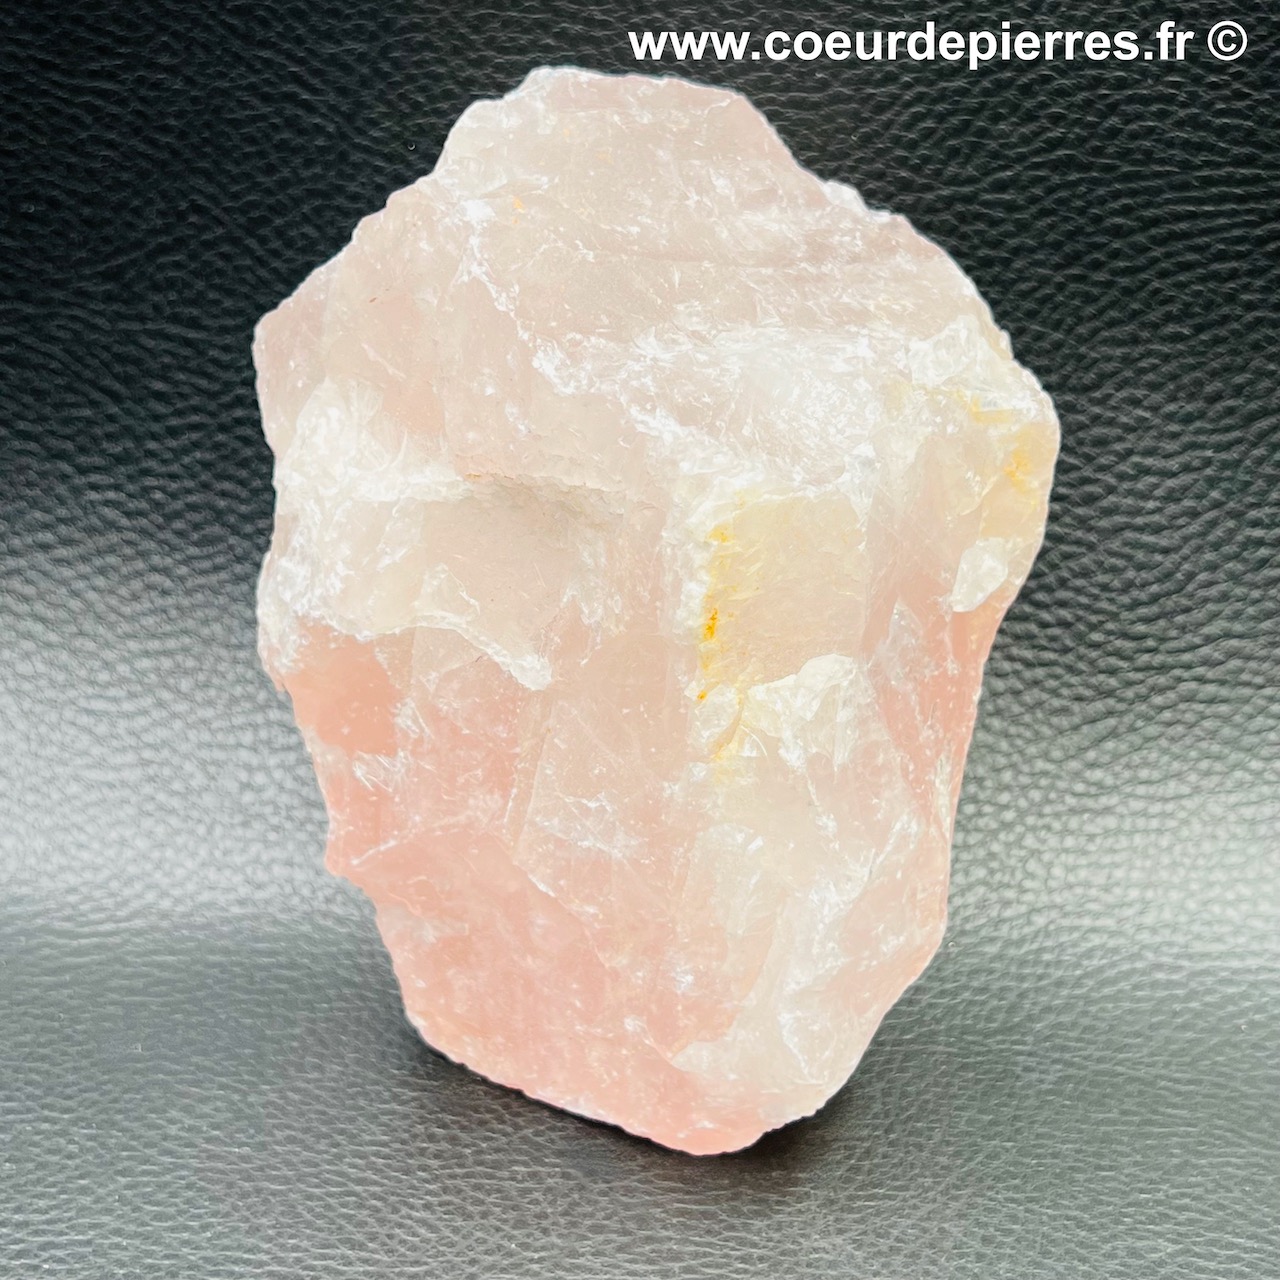 Bloc brut de quartz rose de Madagascar (réf prb6)